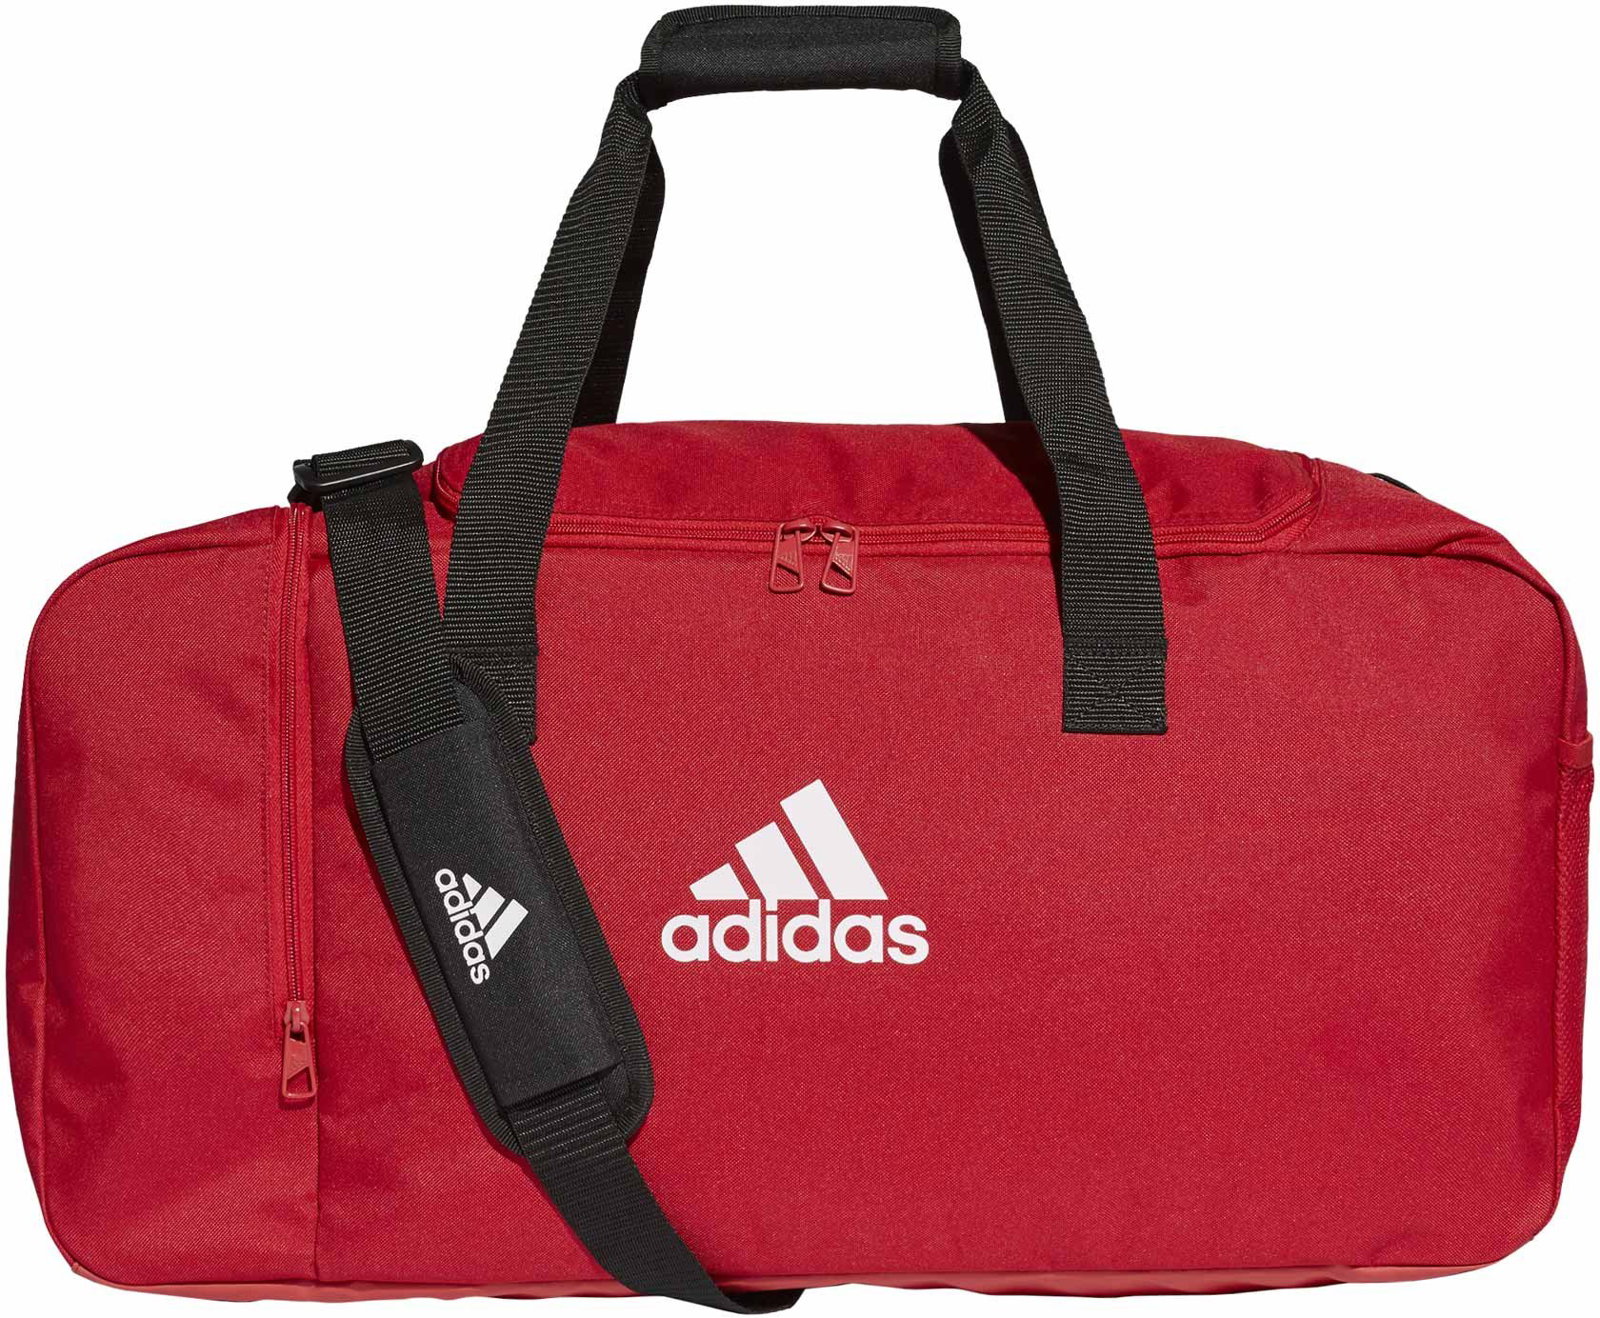 Used Adidas Bag | SidelineSwap